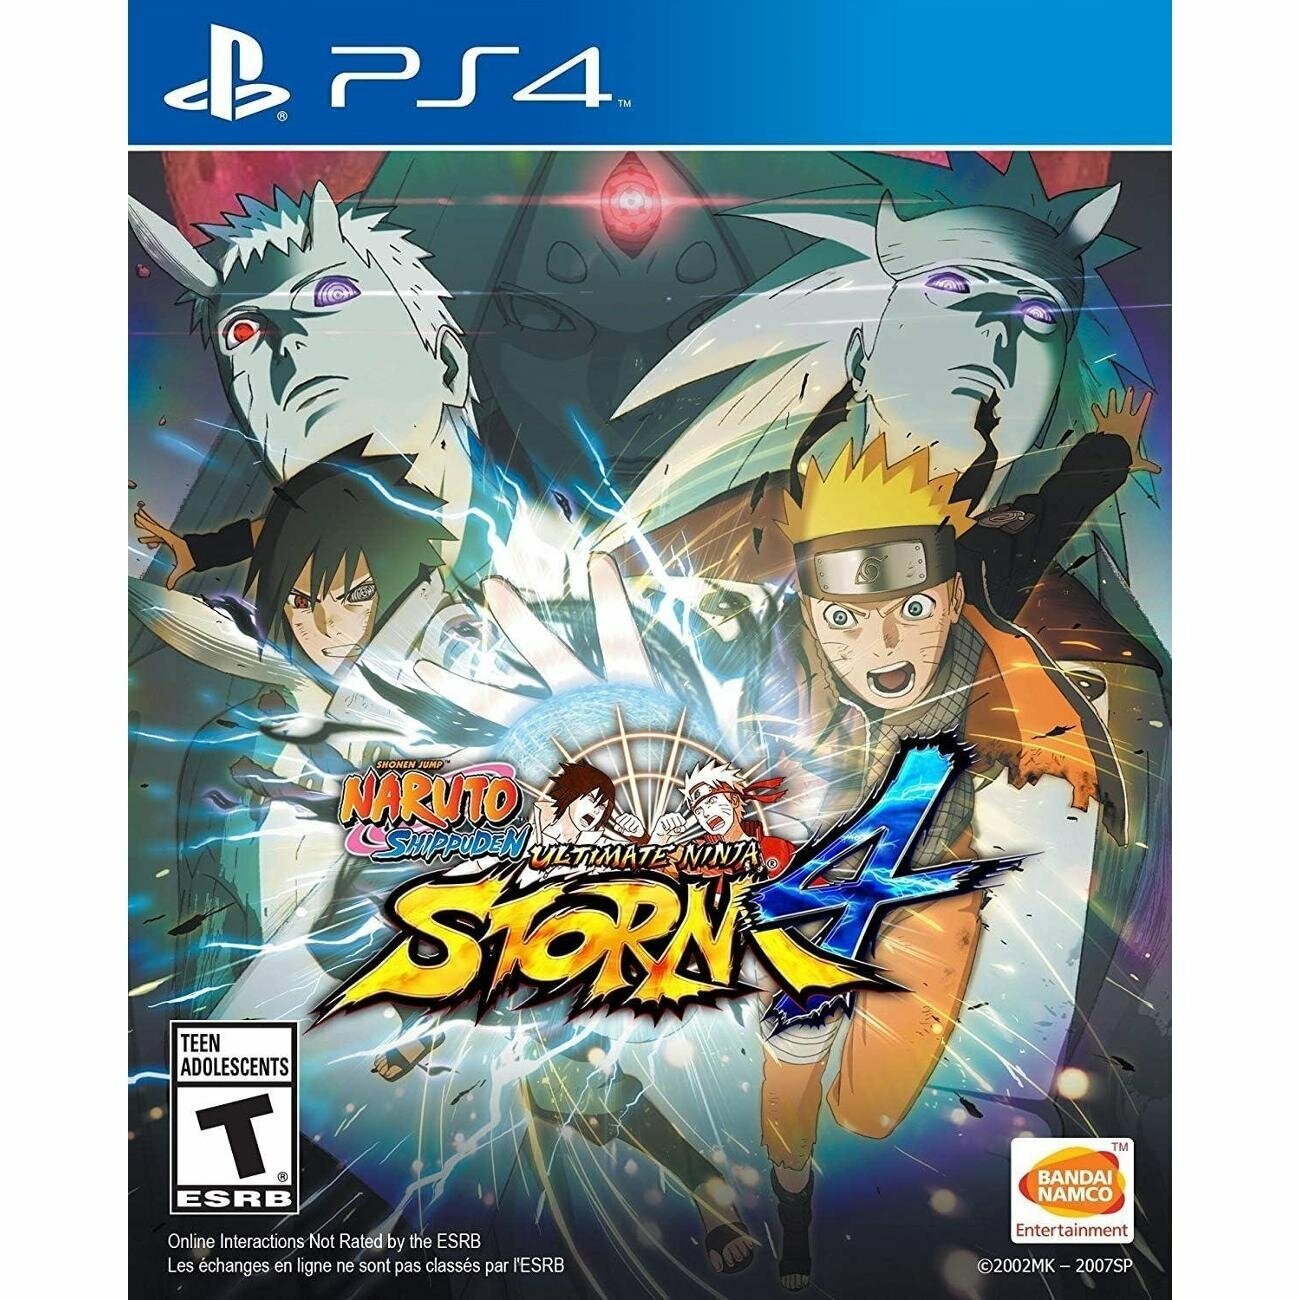 PS4 игра Bandai Namco Naruto Shippuden: Ultimate Ninja Storm 4 (рус. суб.)